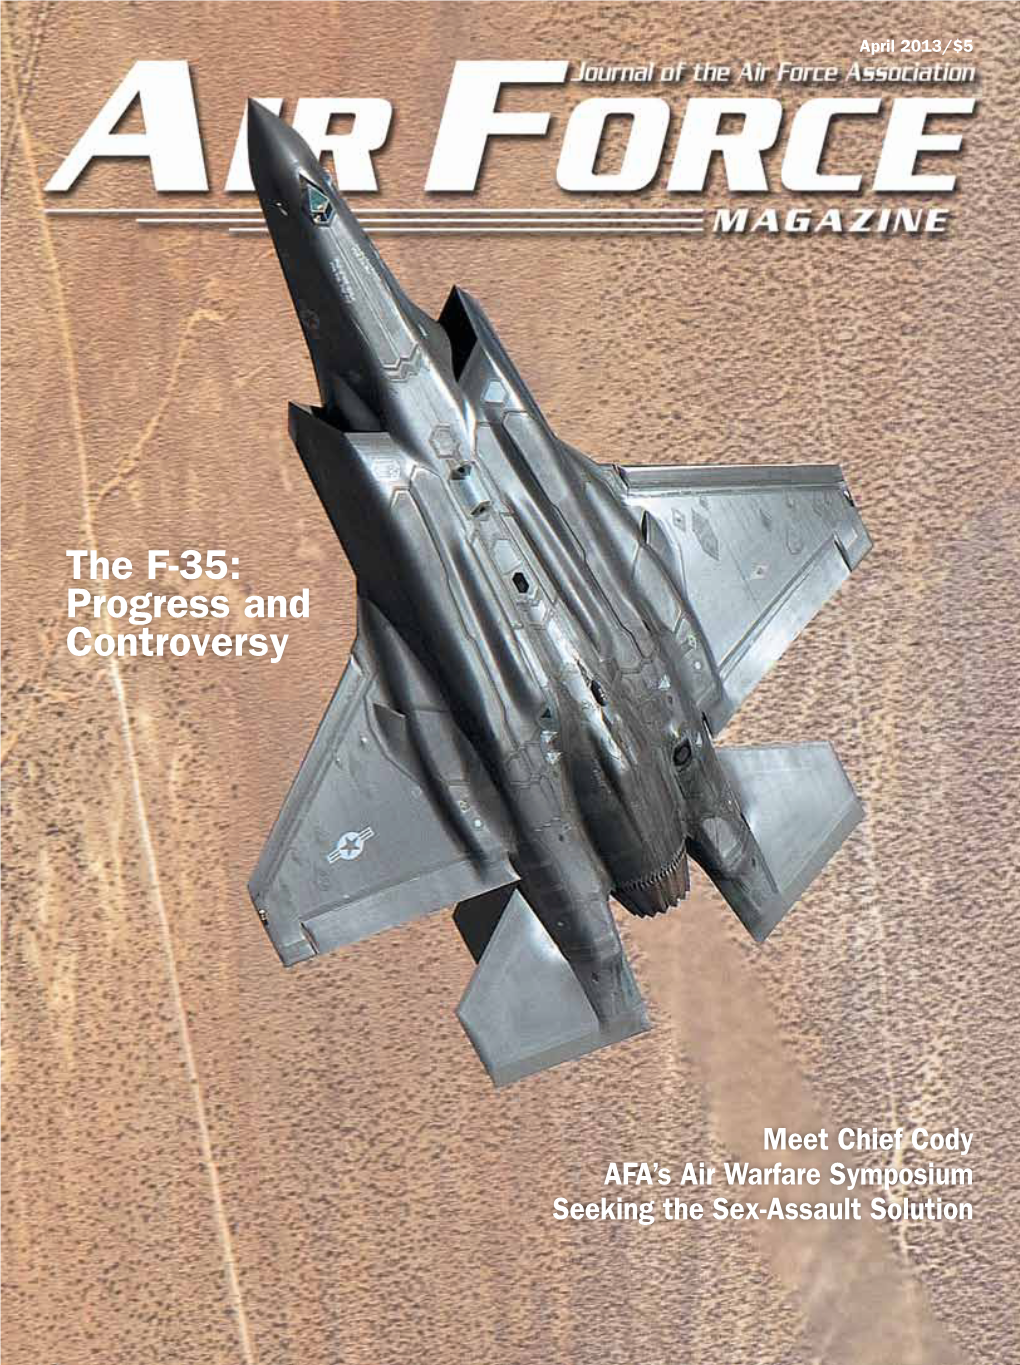 The F-35: Progress and Controversy